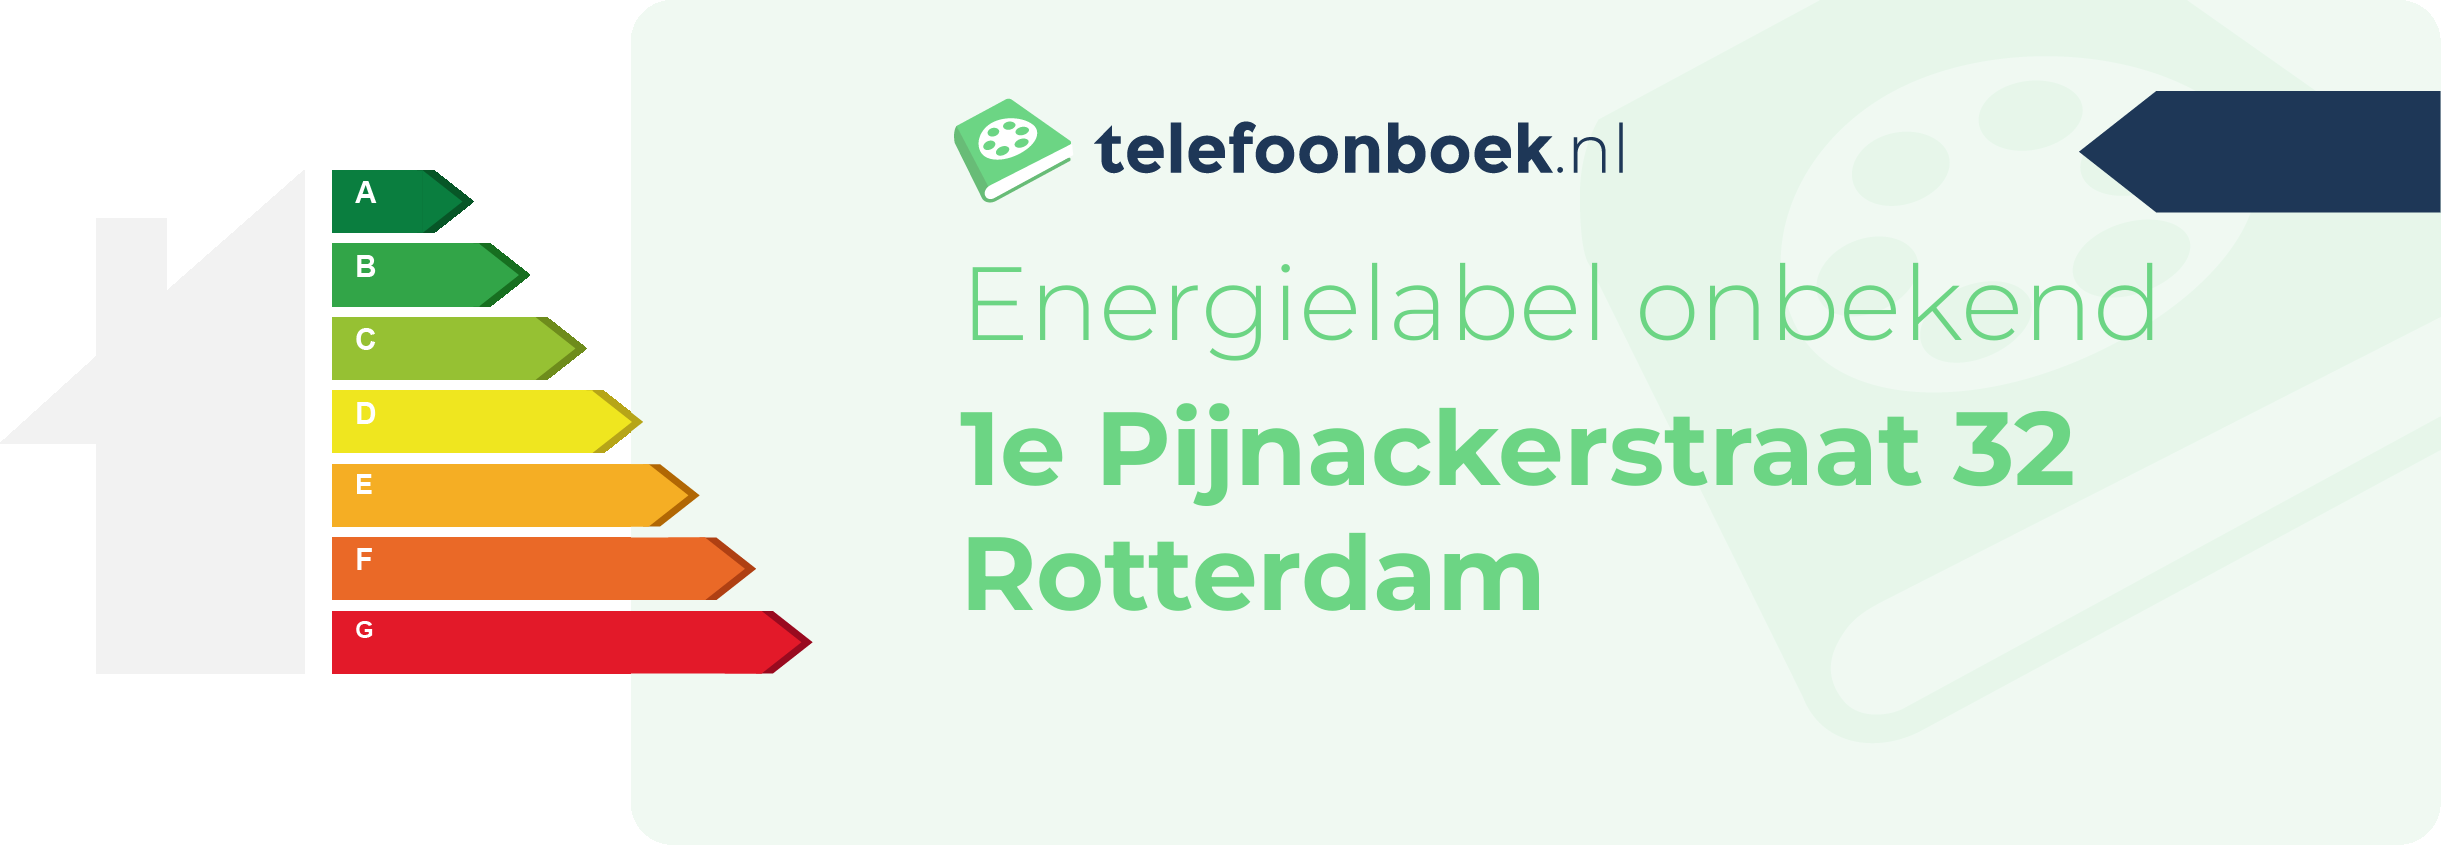 Energielabel 1e Pijnackerstraat 32 Rotterdam